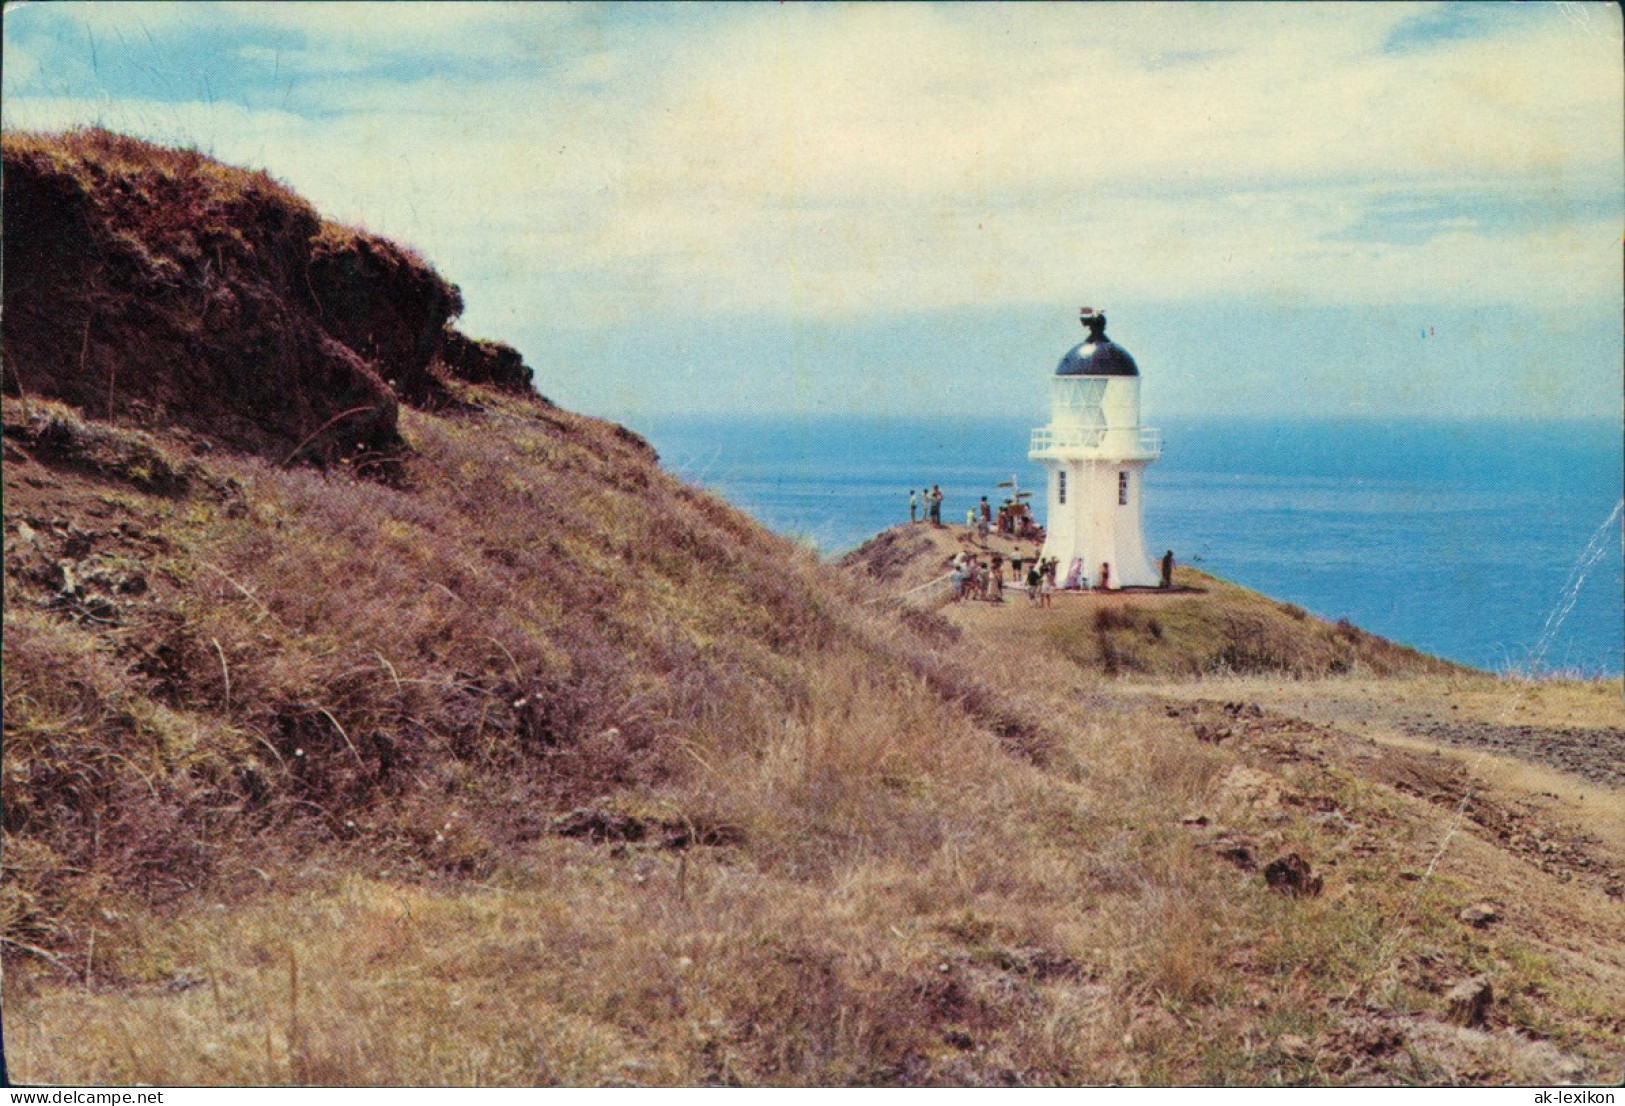 Postcard Neuseeland New Zealand CAPE REINGA Neuseeland New Zealand 1980 - Nouvelle-Zélande